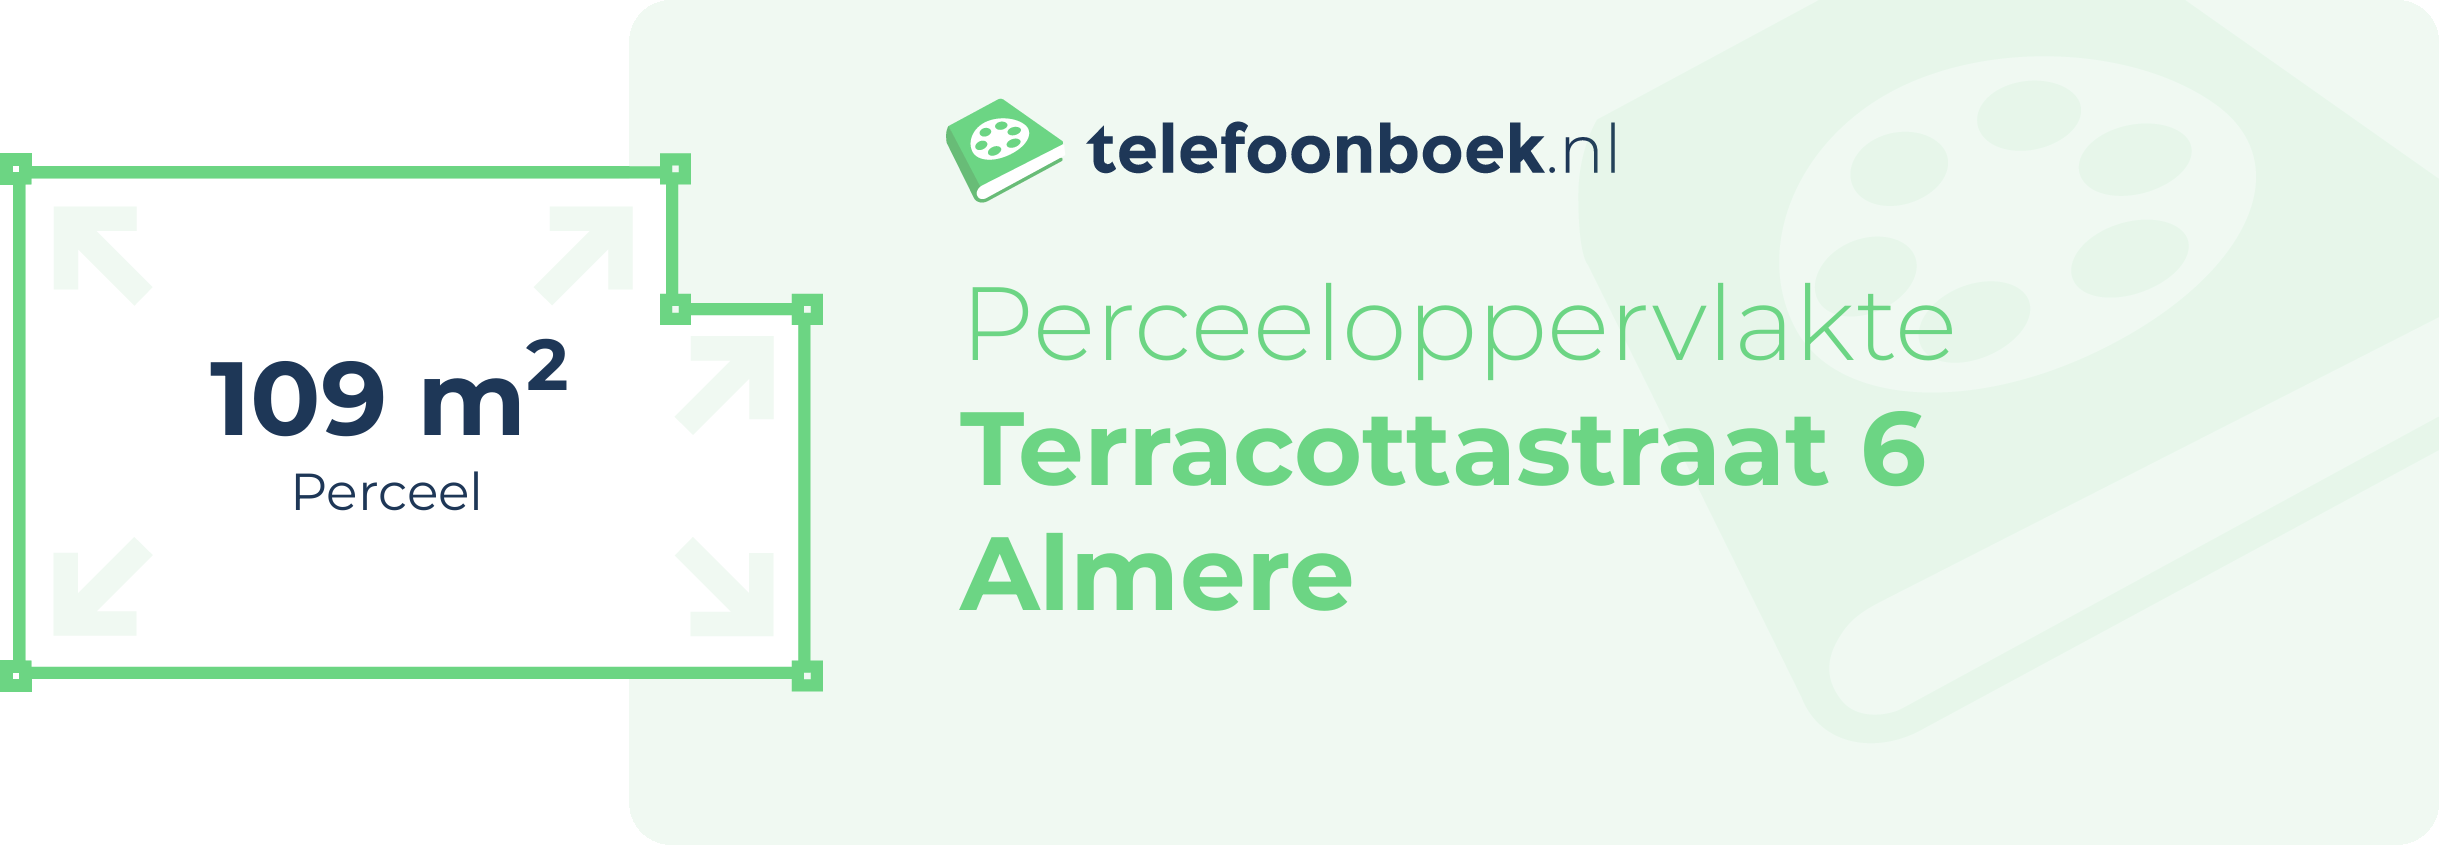 Perceeloppervlakte Terracottastraat 6 Almere